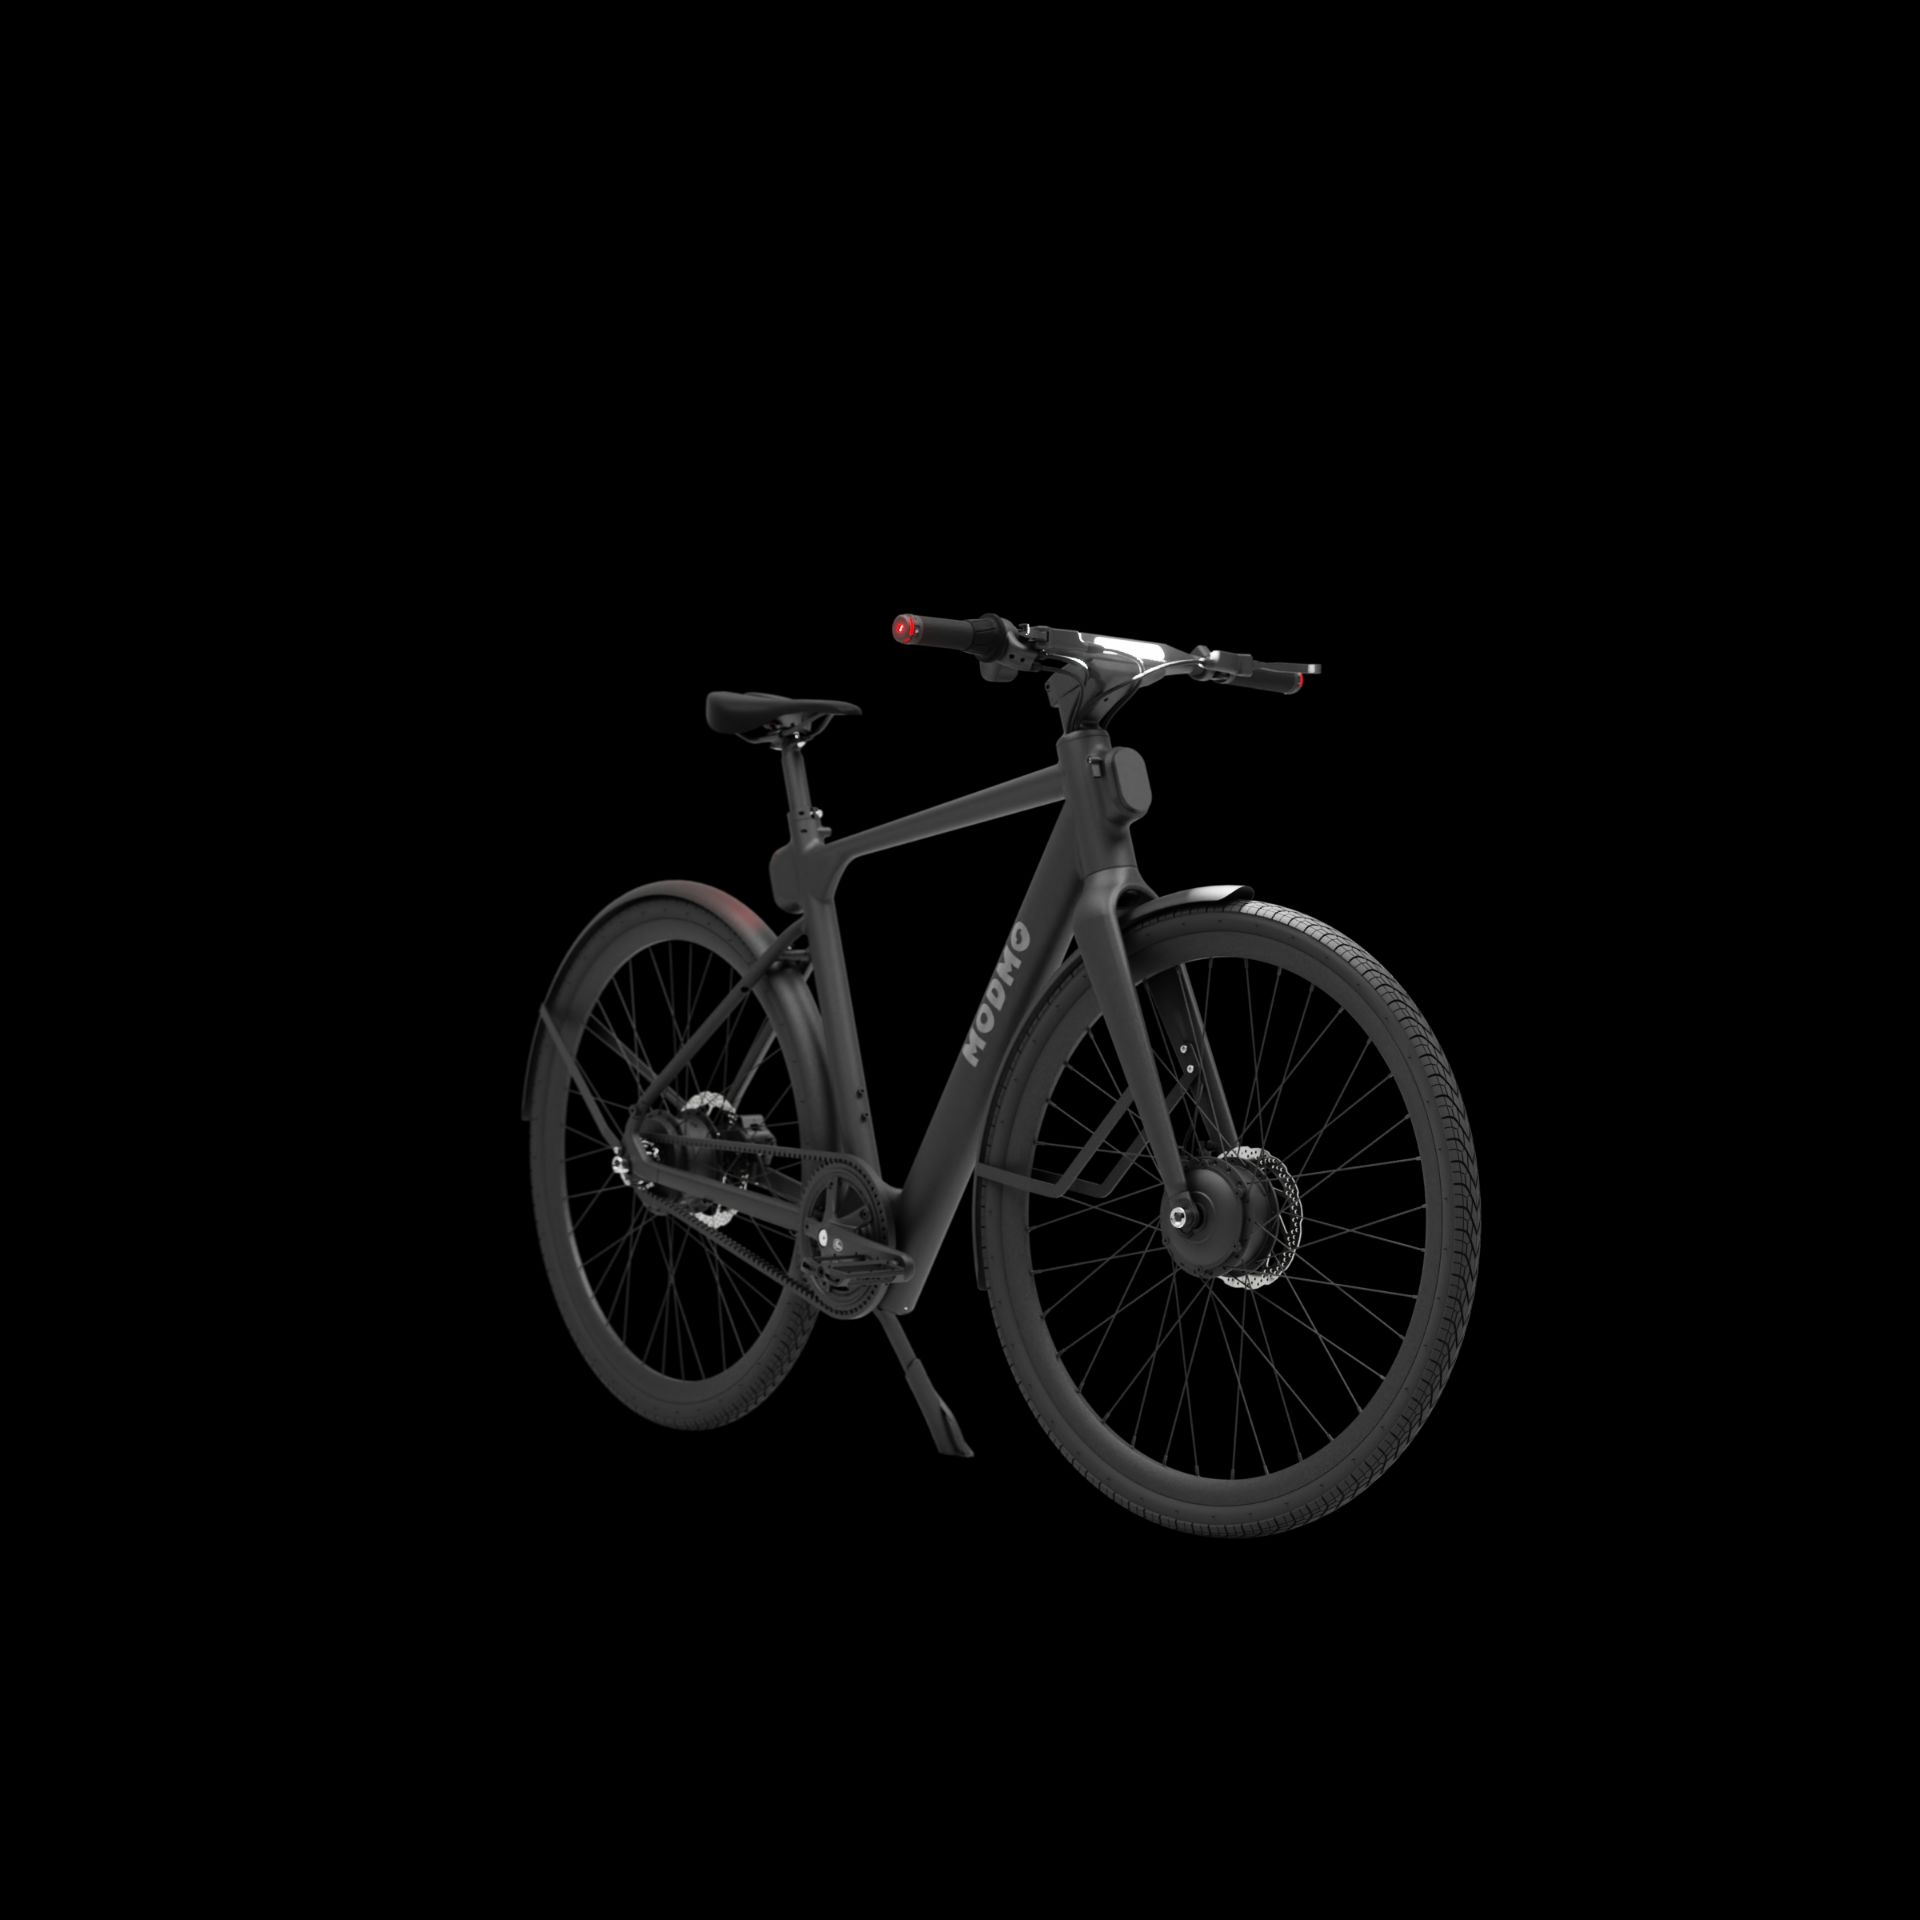 Modmo Saigon+ Electric Bicycle - RRP £2800 - Size L (Rider 175-190cm) - Image 3 of 22